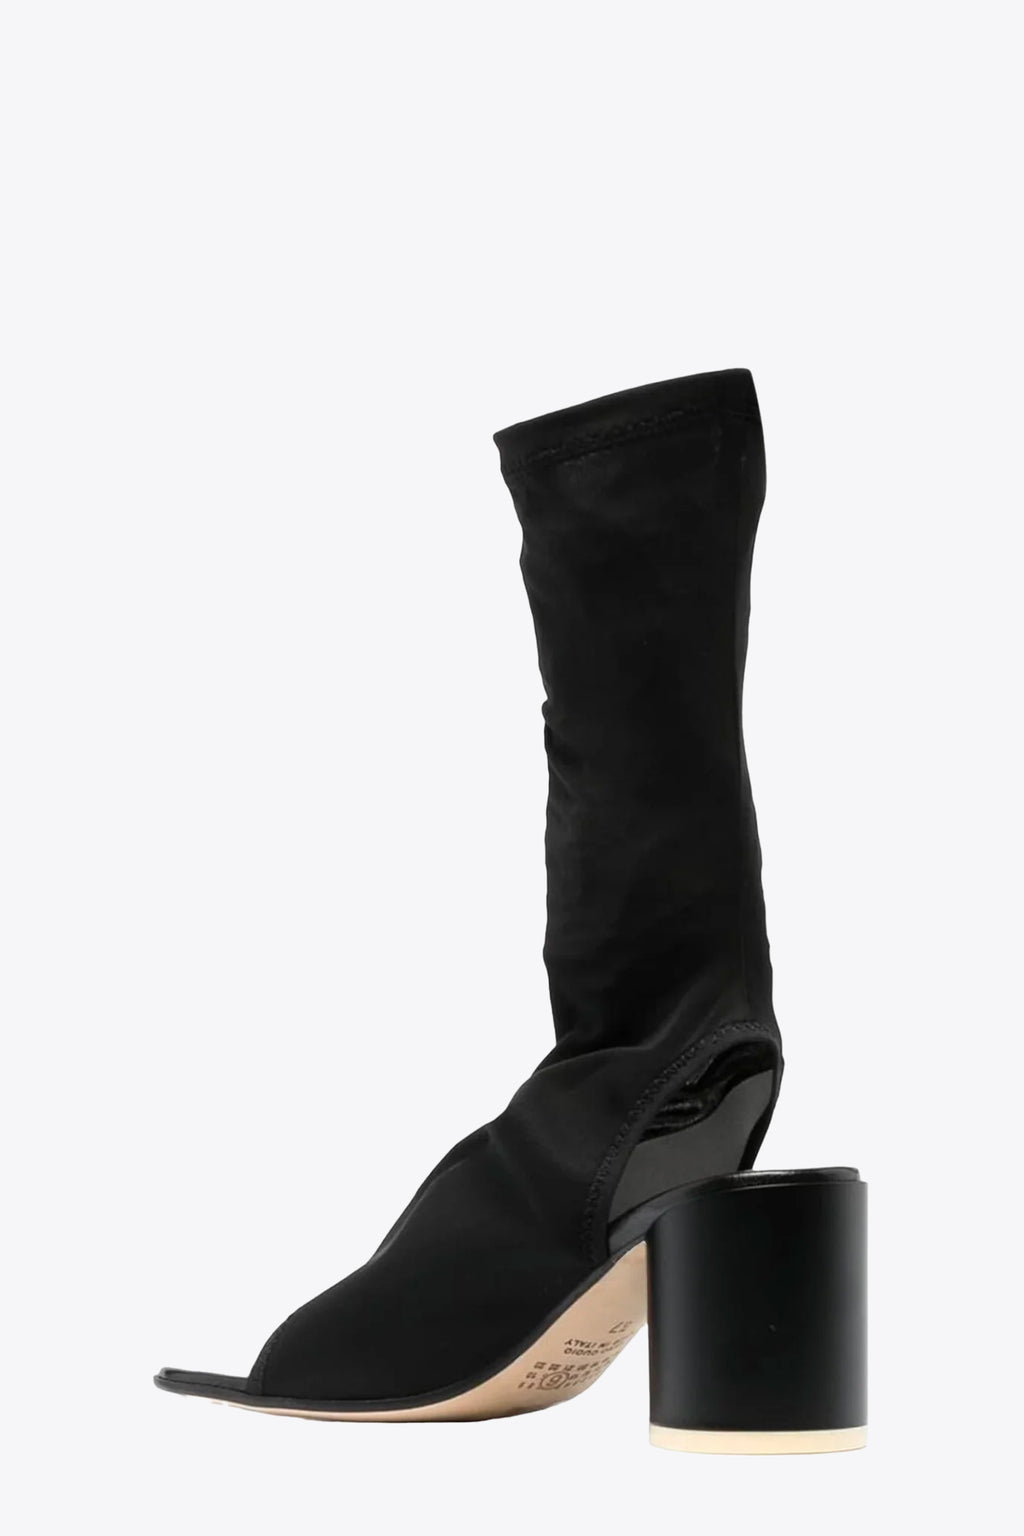 alt-image__Open-toe-black-stretch-lycra-heeled-boots